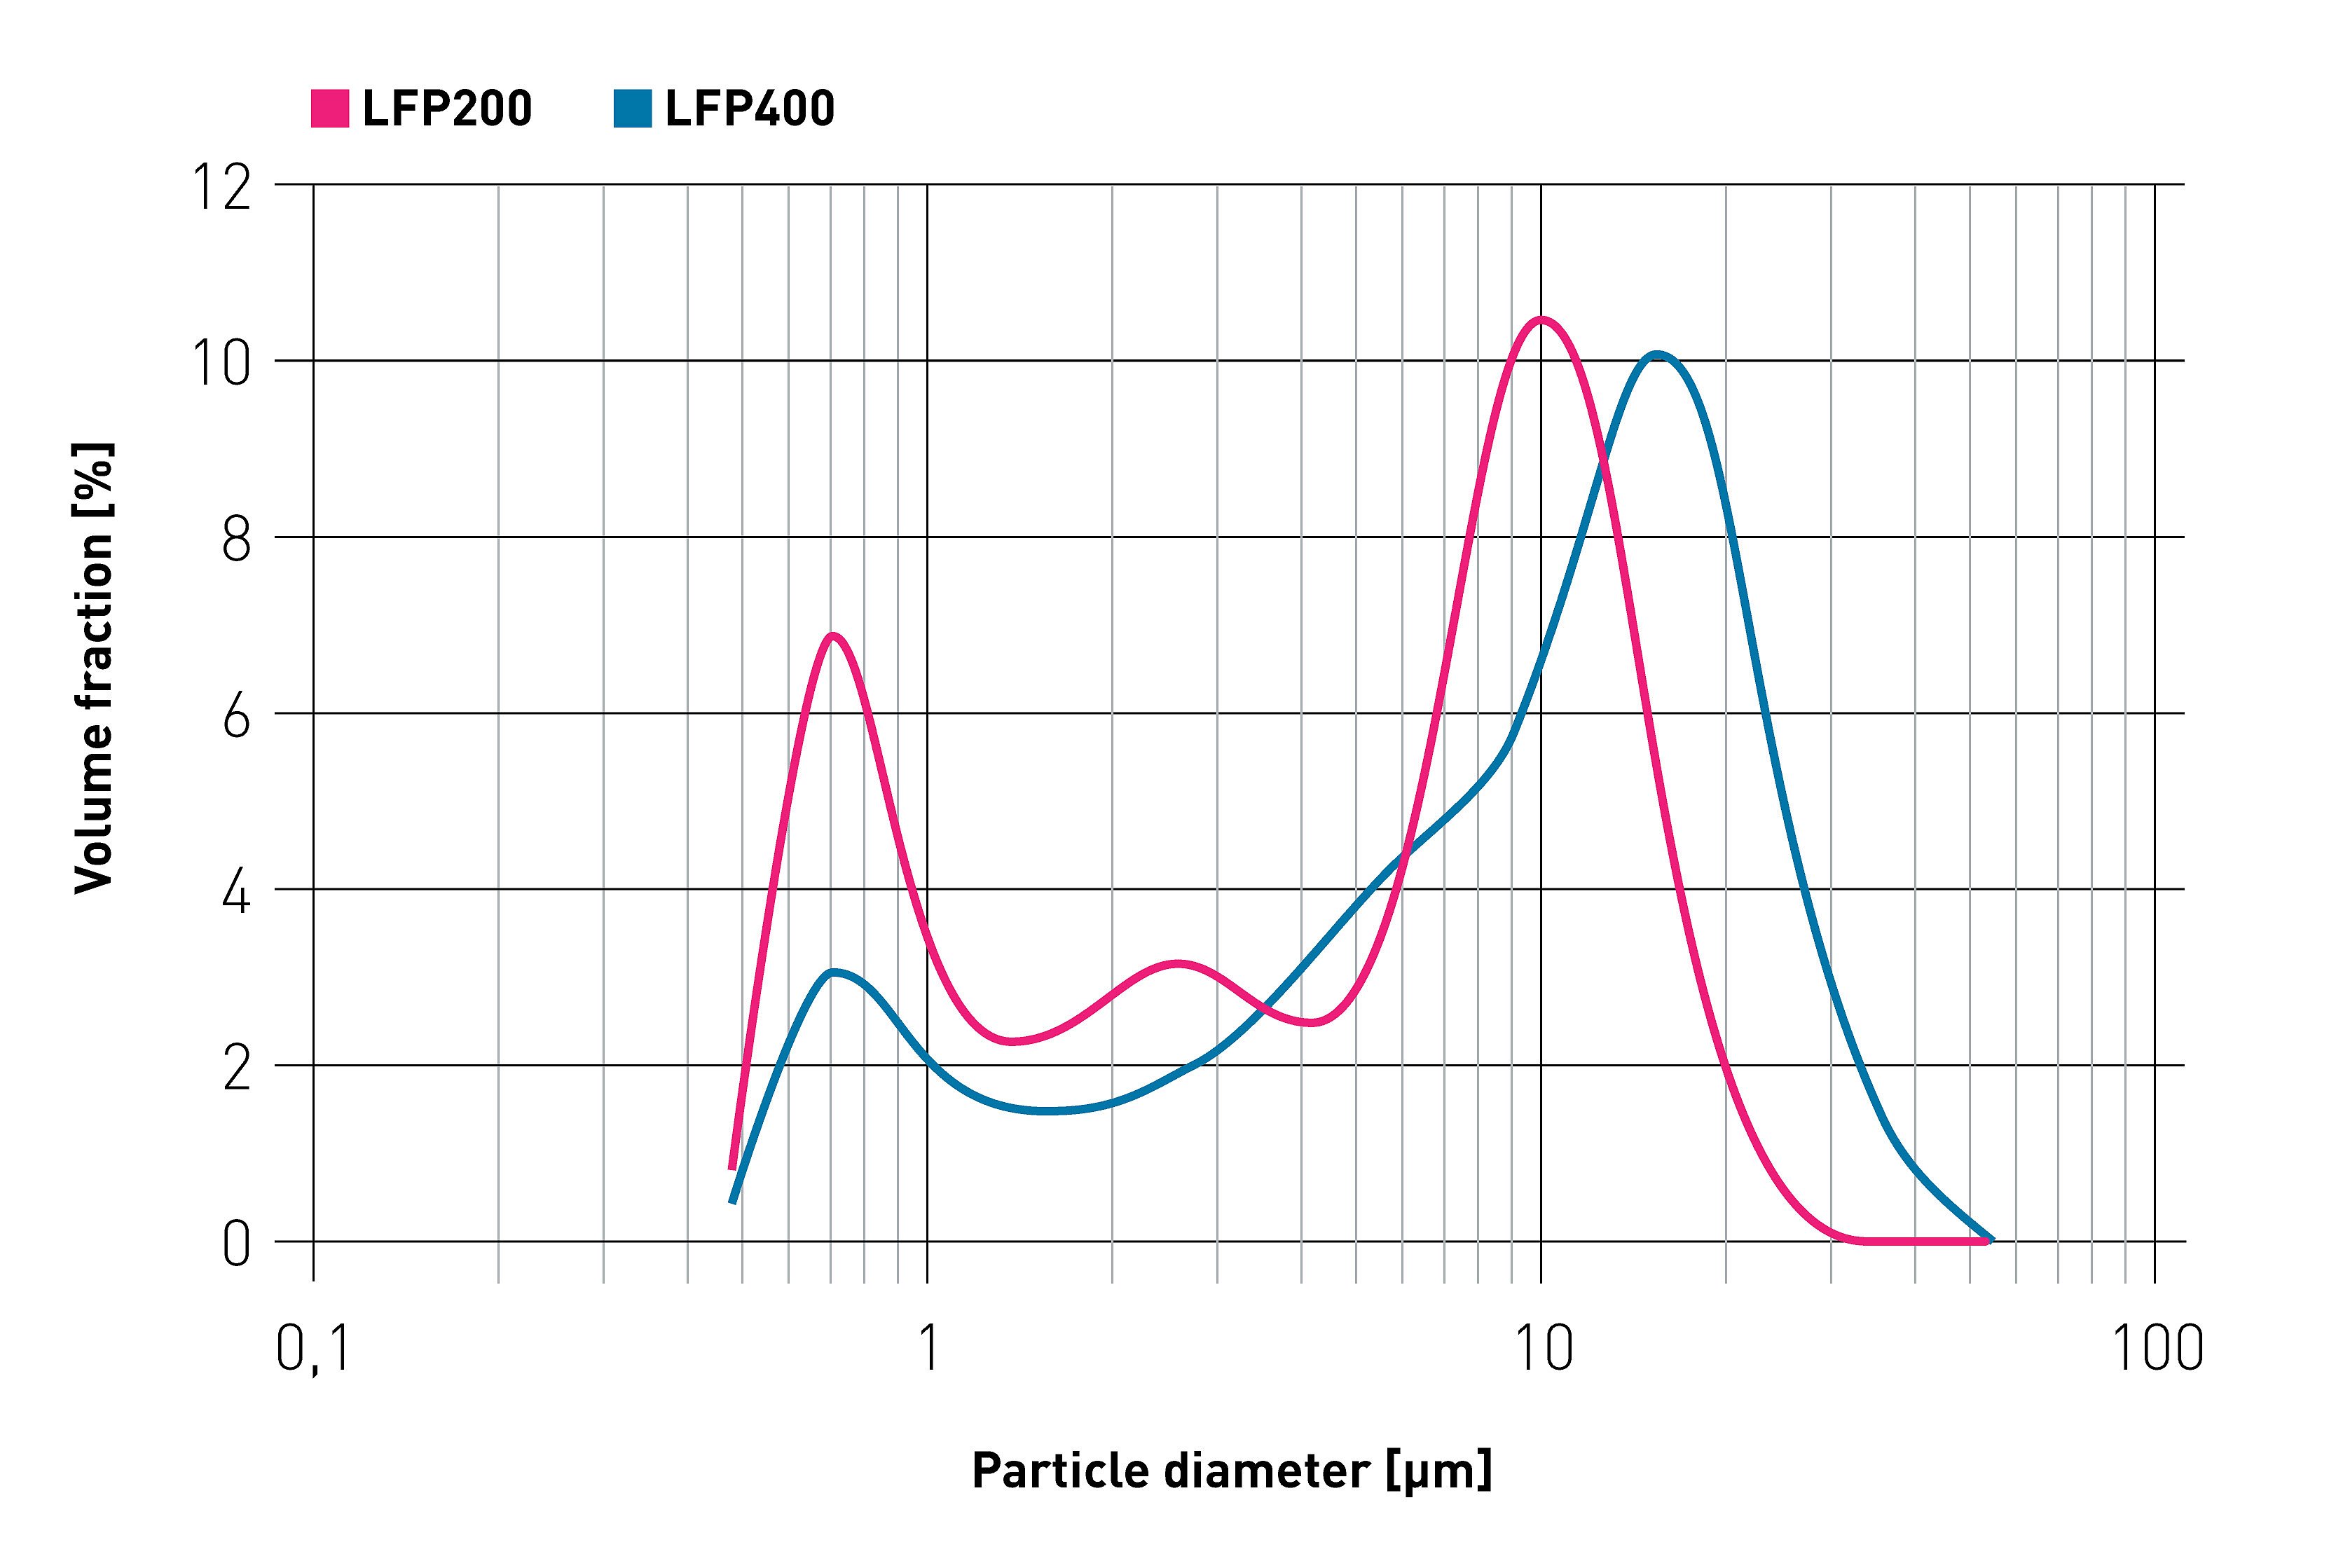 Lithium-Eisenphosphat-Batterie LiFePO oder LFP-Batterie Lithium